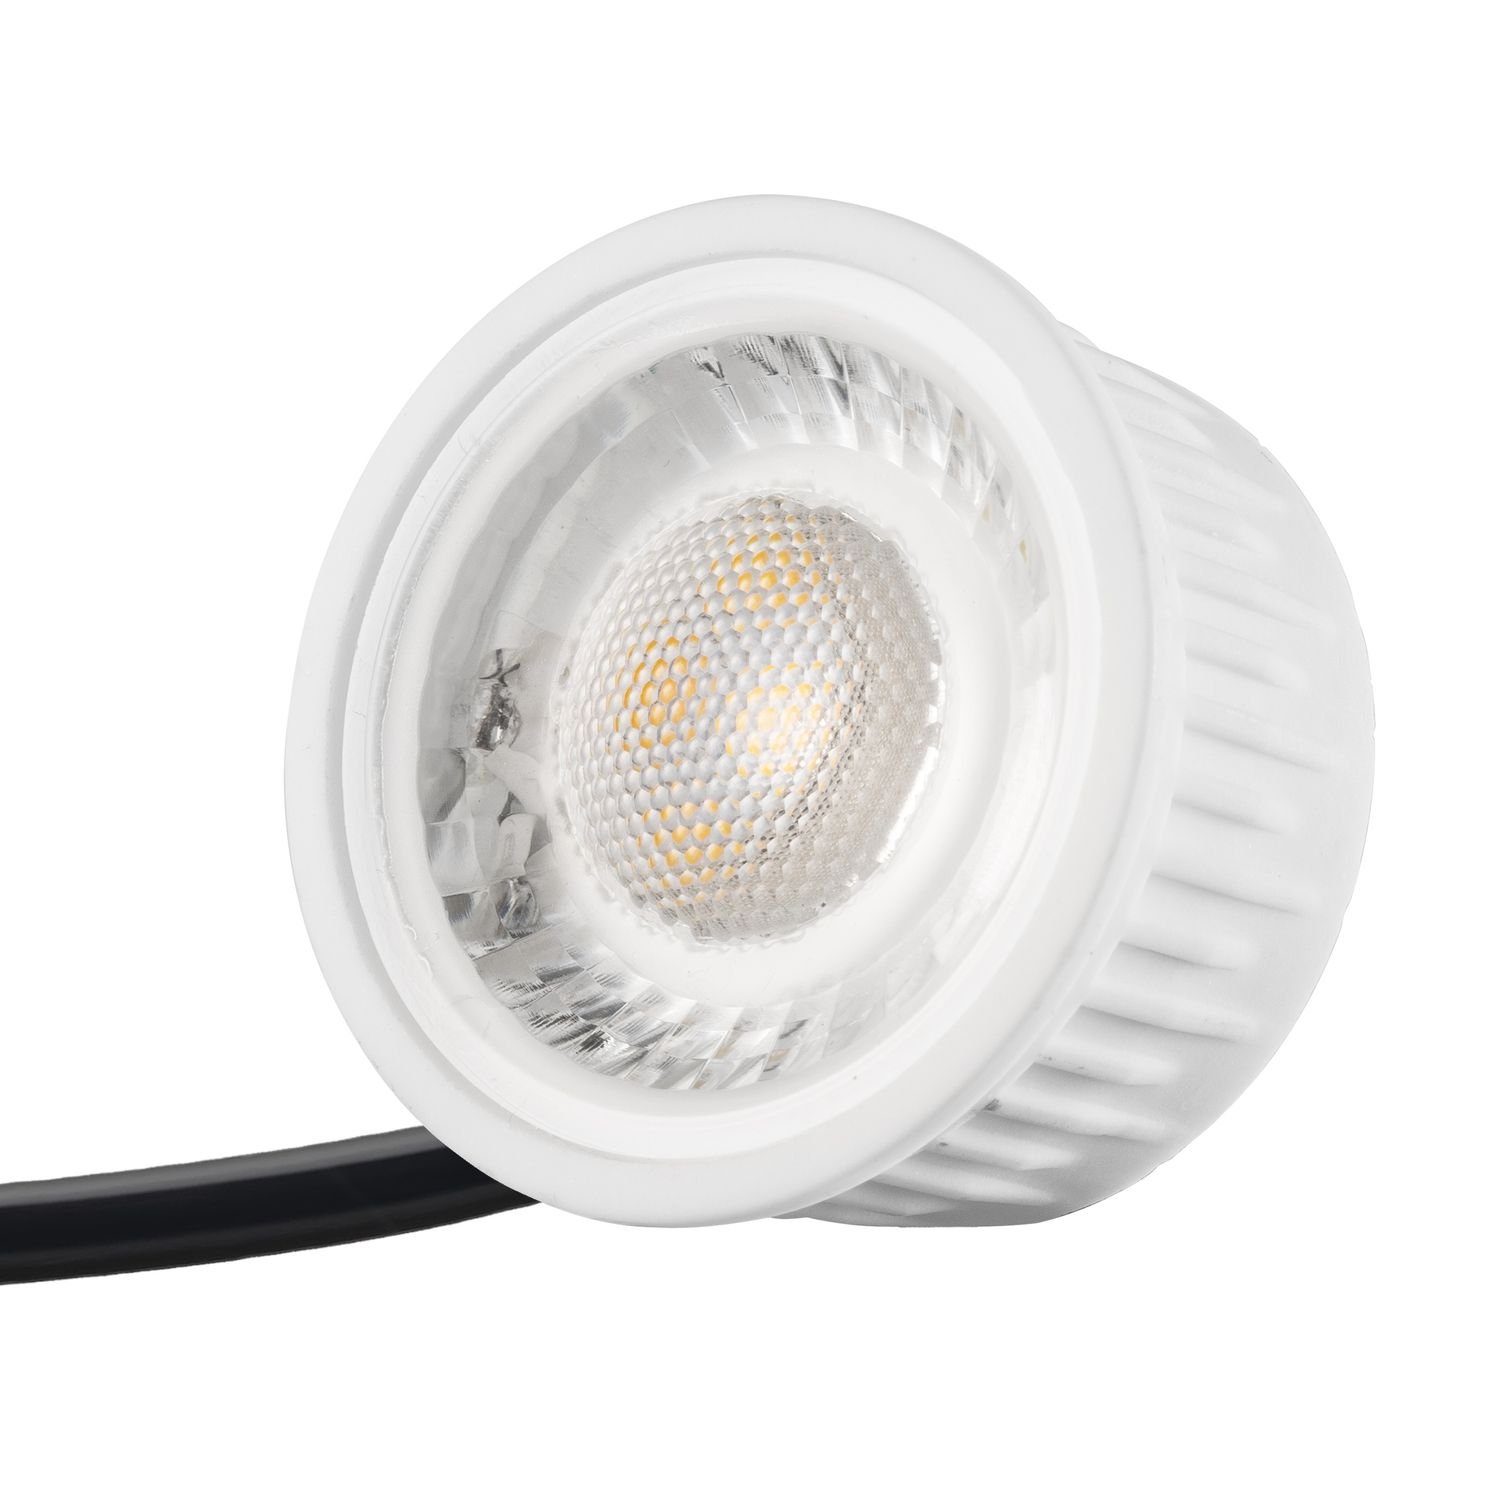 LEDANDO LED 5W Leuchtmitt Einbaustrahler flach anthrazit extra mit Set in LED 10er Einbaustrahler